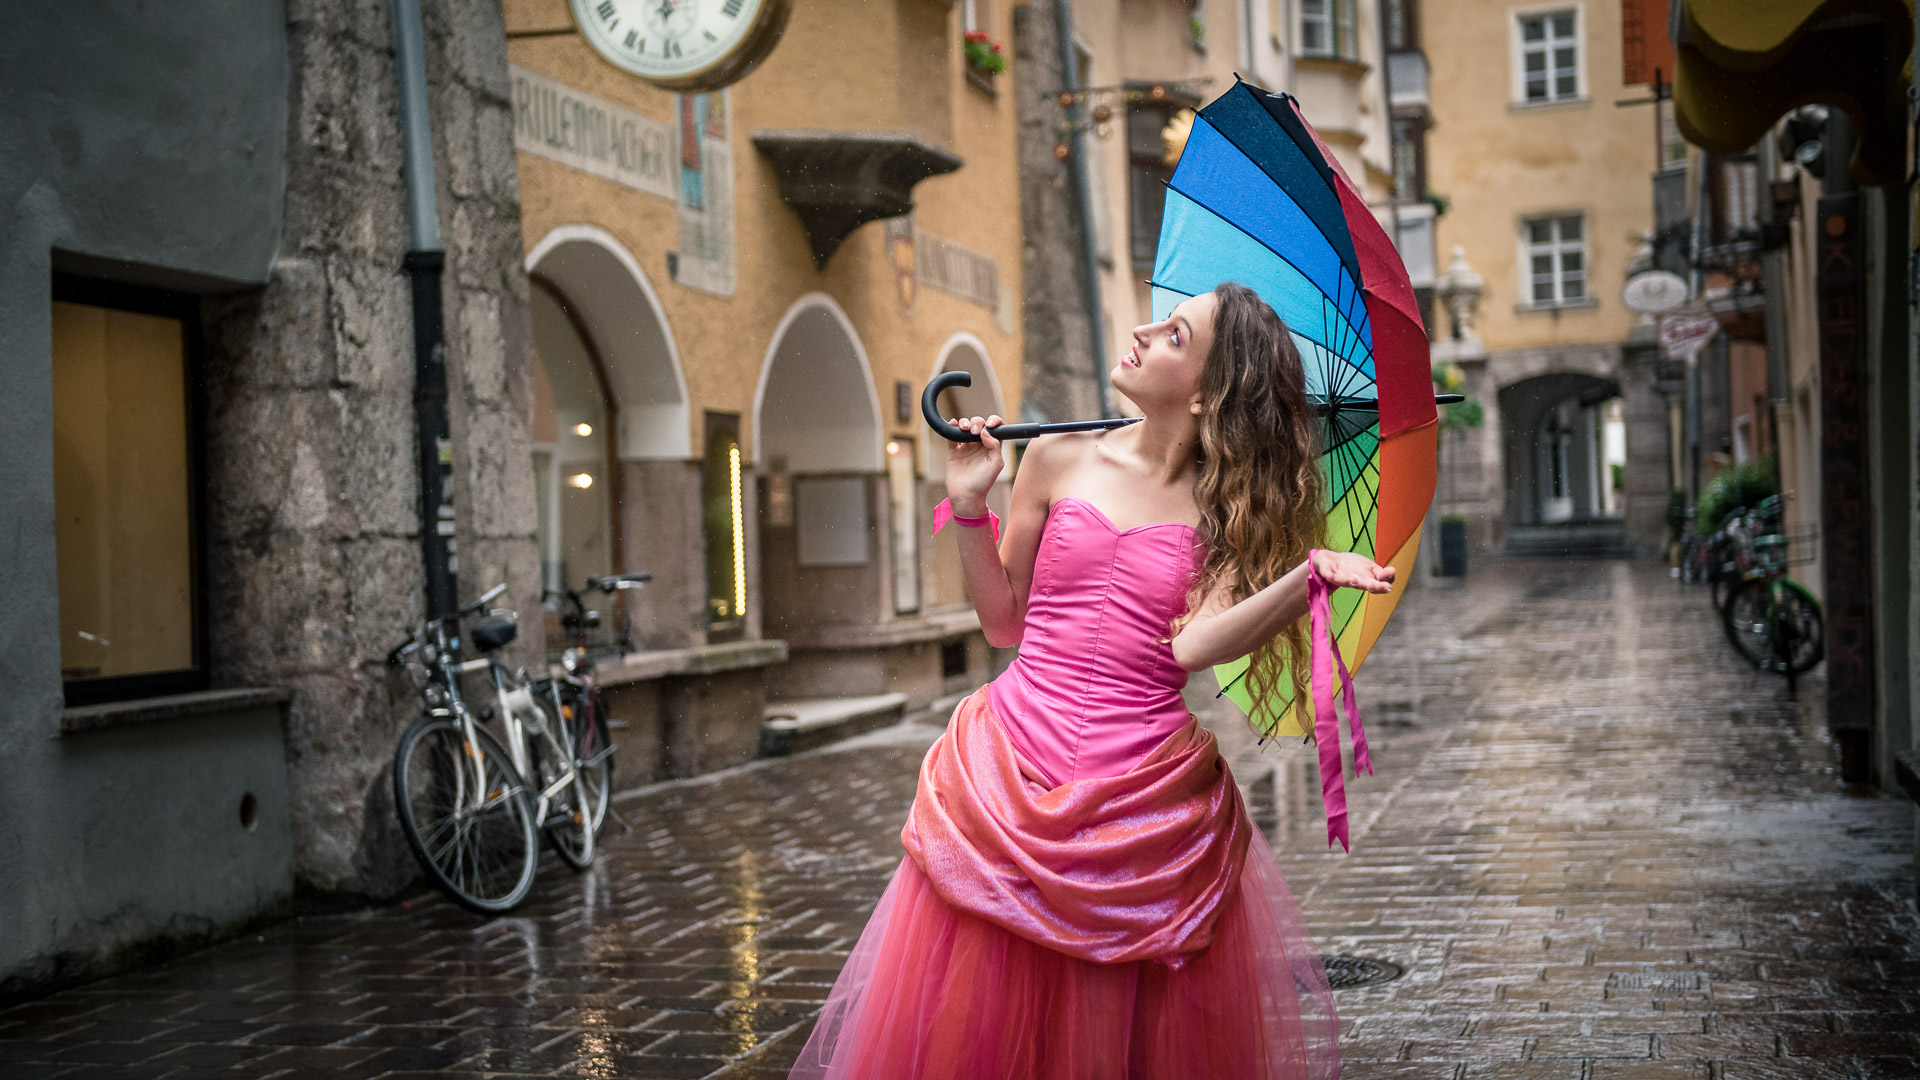 girl, pink dress, rain, umbrella, rainbow umbrella, old city, cobbled street, tulle skirt, corset